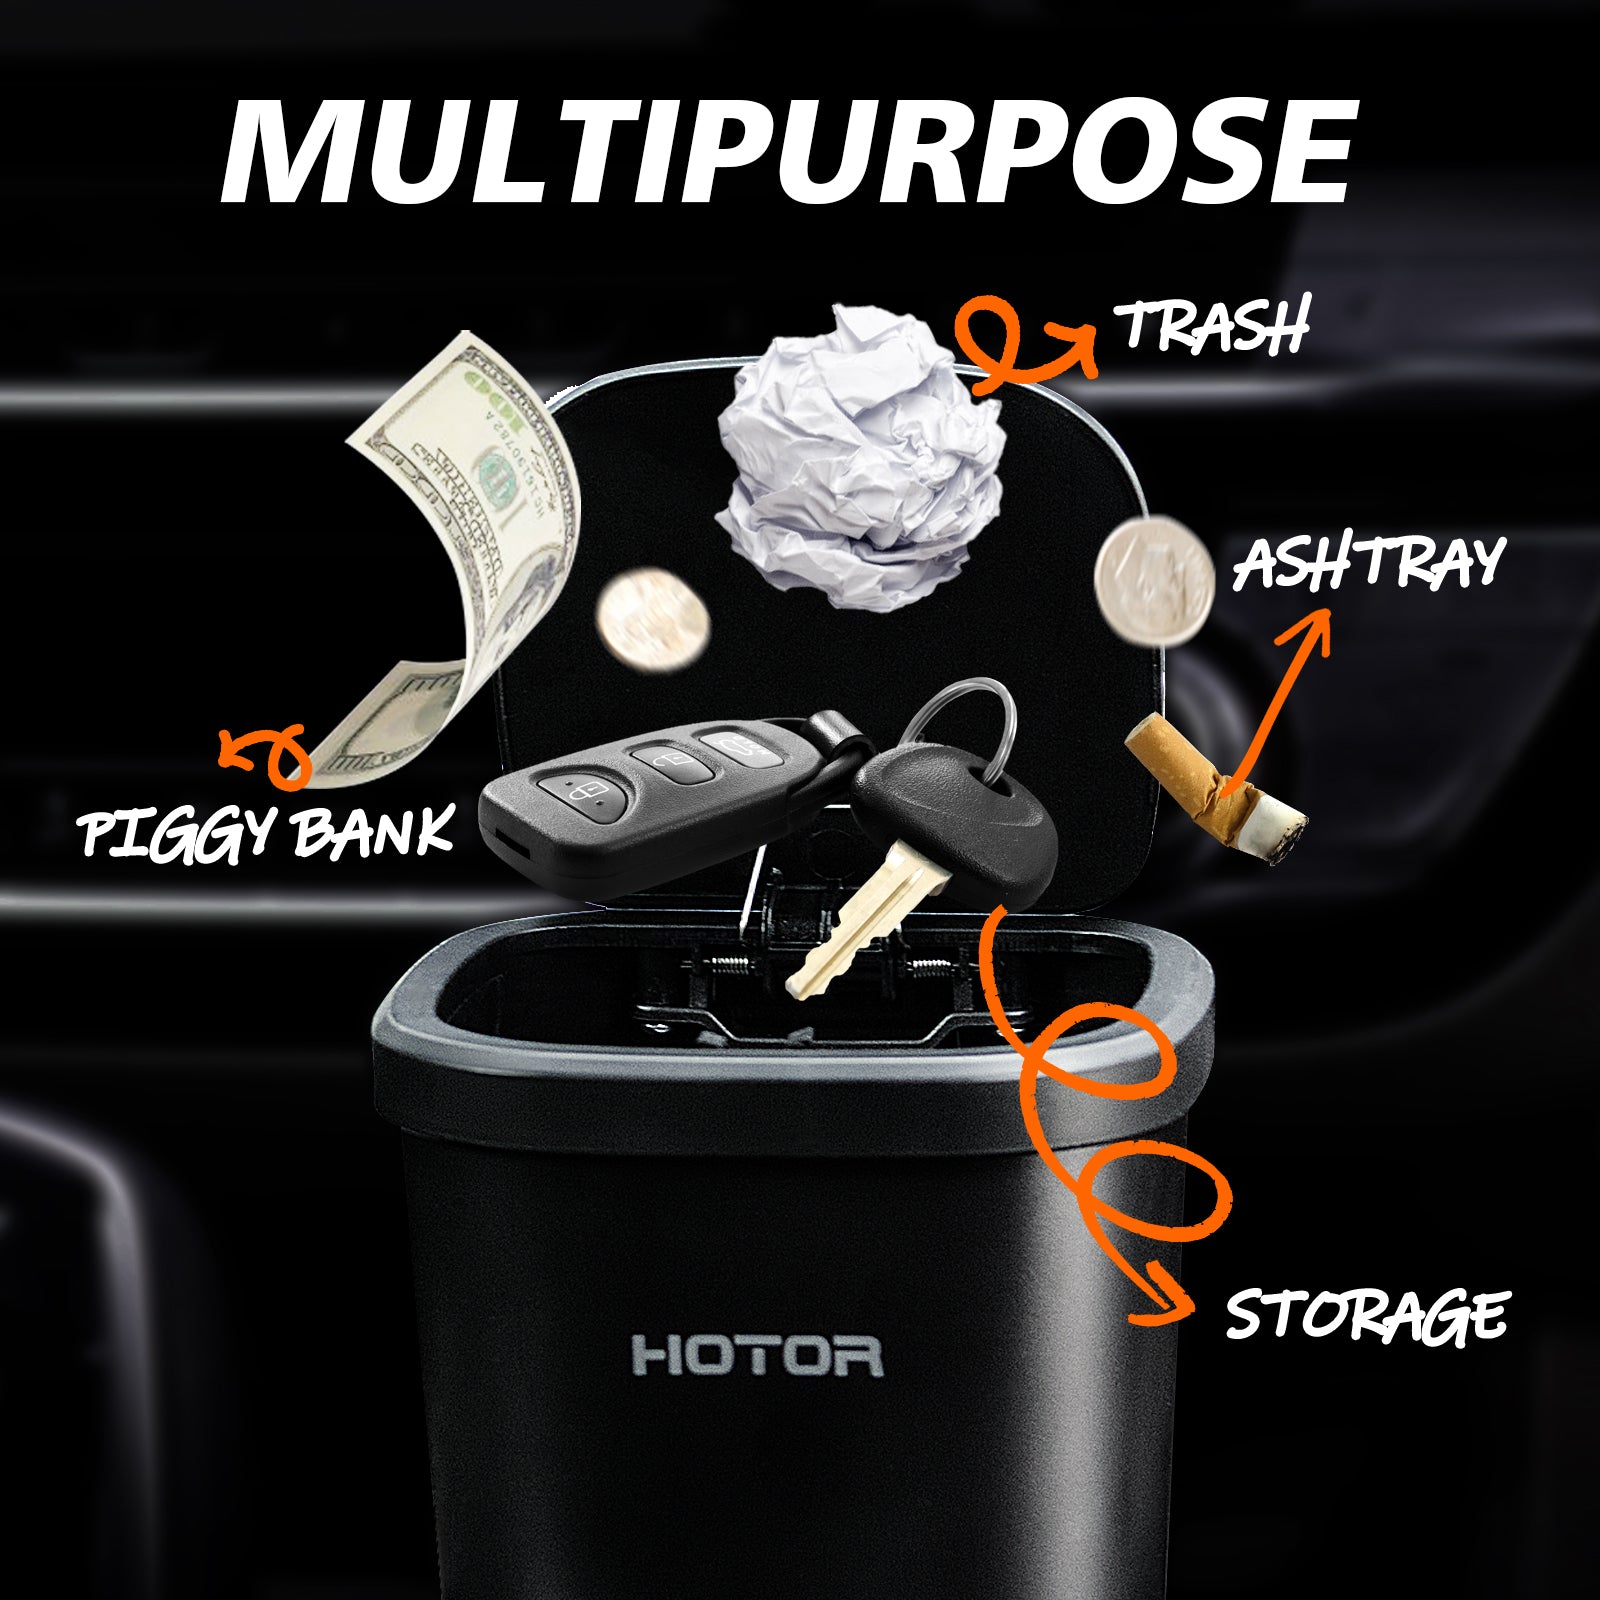 HOTOR Car Trash Can 2.5 Gallon - Handy Tissue Holder, Easy-to-Install